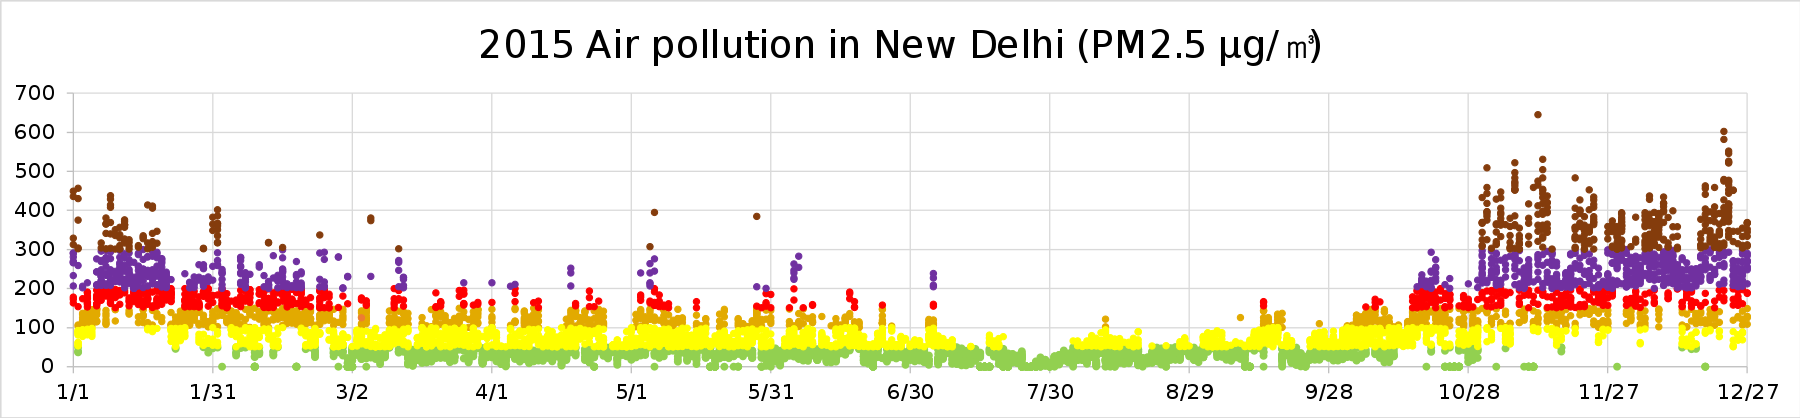 2015 Air pollution in New Delhi (PM2.5 AQI). @media(min-width:720px){.mw-parser-output .columns-start .column{float:left;min-width:20em}.mw-parser-output .columns-2 .column{width:50%}.mw-parser-output .columns-3 .column{width:33.3%}.mw-parser-output .columns-4 .column{width:25%}.mw-parser-output .columns-5 .column{width:20%)) .mw-parser-output .legend{page-break-inside:avoid;break-inside:avoid-column}.mw-parser-output .legend-color{display:inline-block;min-width:1.25em;height:1.25em;line-height:1.25;margin:1px 0;text-align:center;border:1px solid black;background-color:transparent;color:black}.mw-parser-output .legend-text{}   Hazardous     Very Unhealthy     Unhealthy     Unhealthy for Sensitive Groups    Moderate     Good